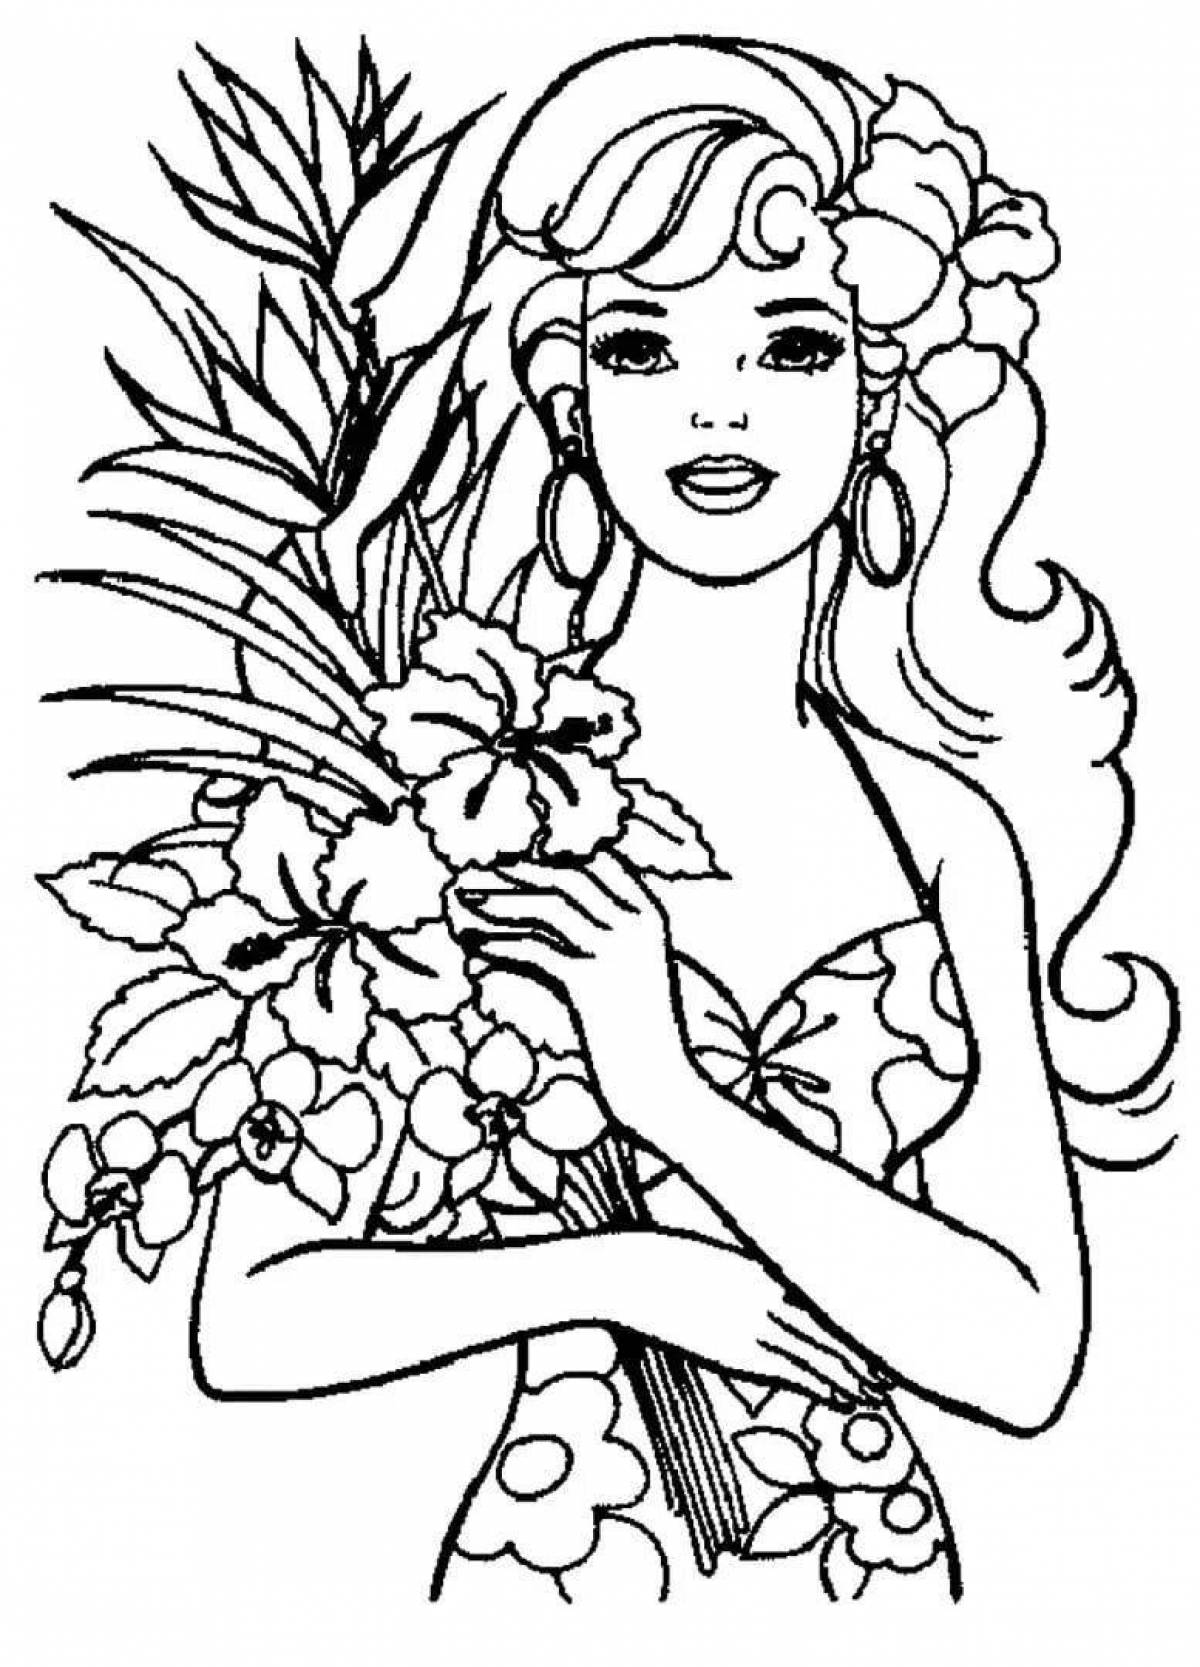 Joyful coloring girl with flowers